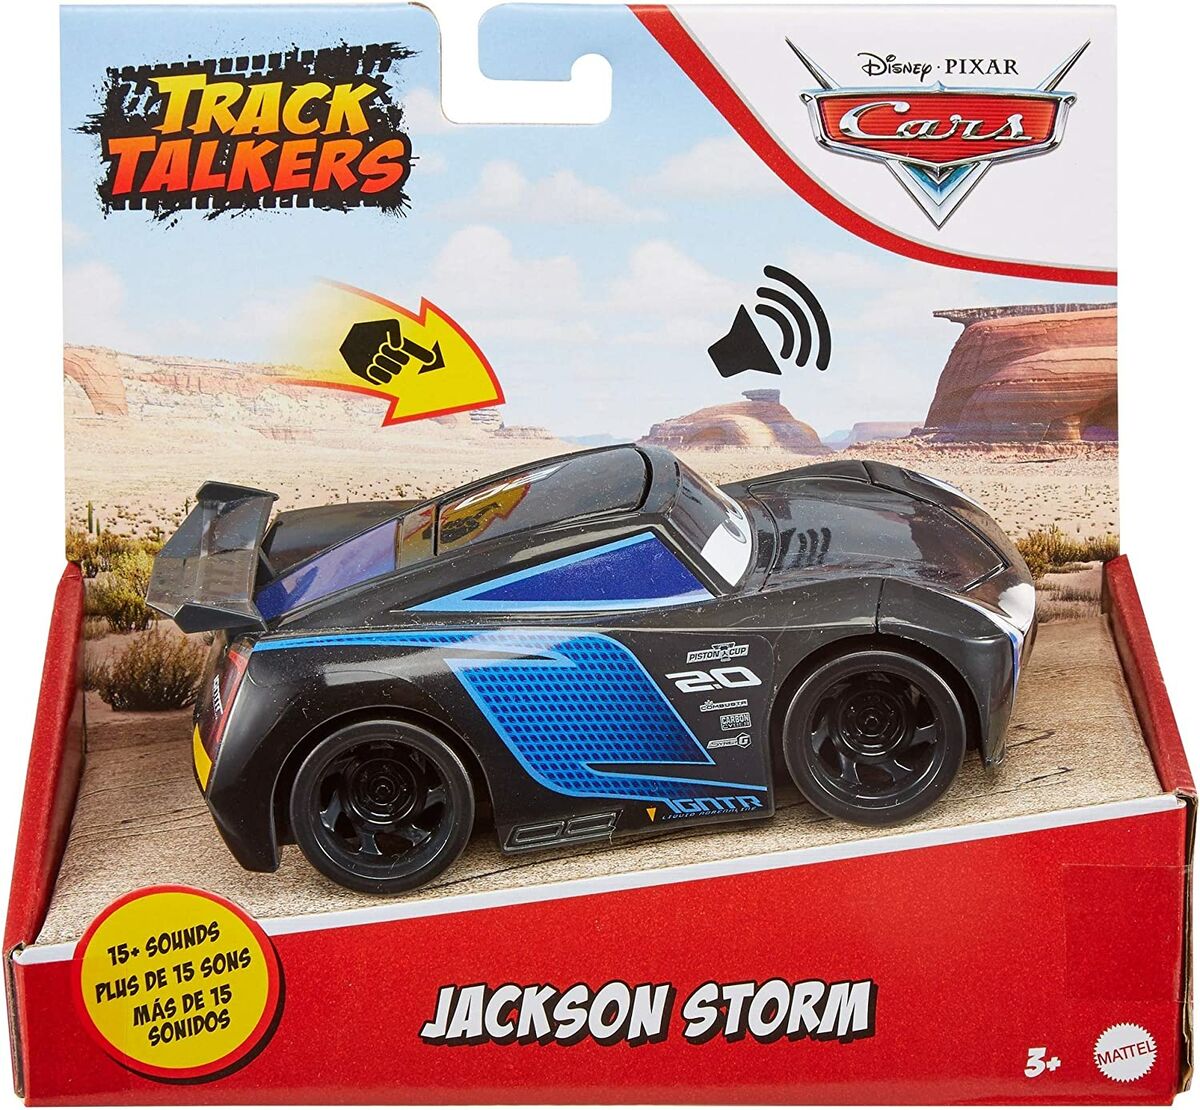 Cars Track Talkers Jackson Storm